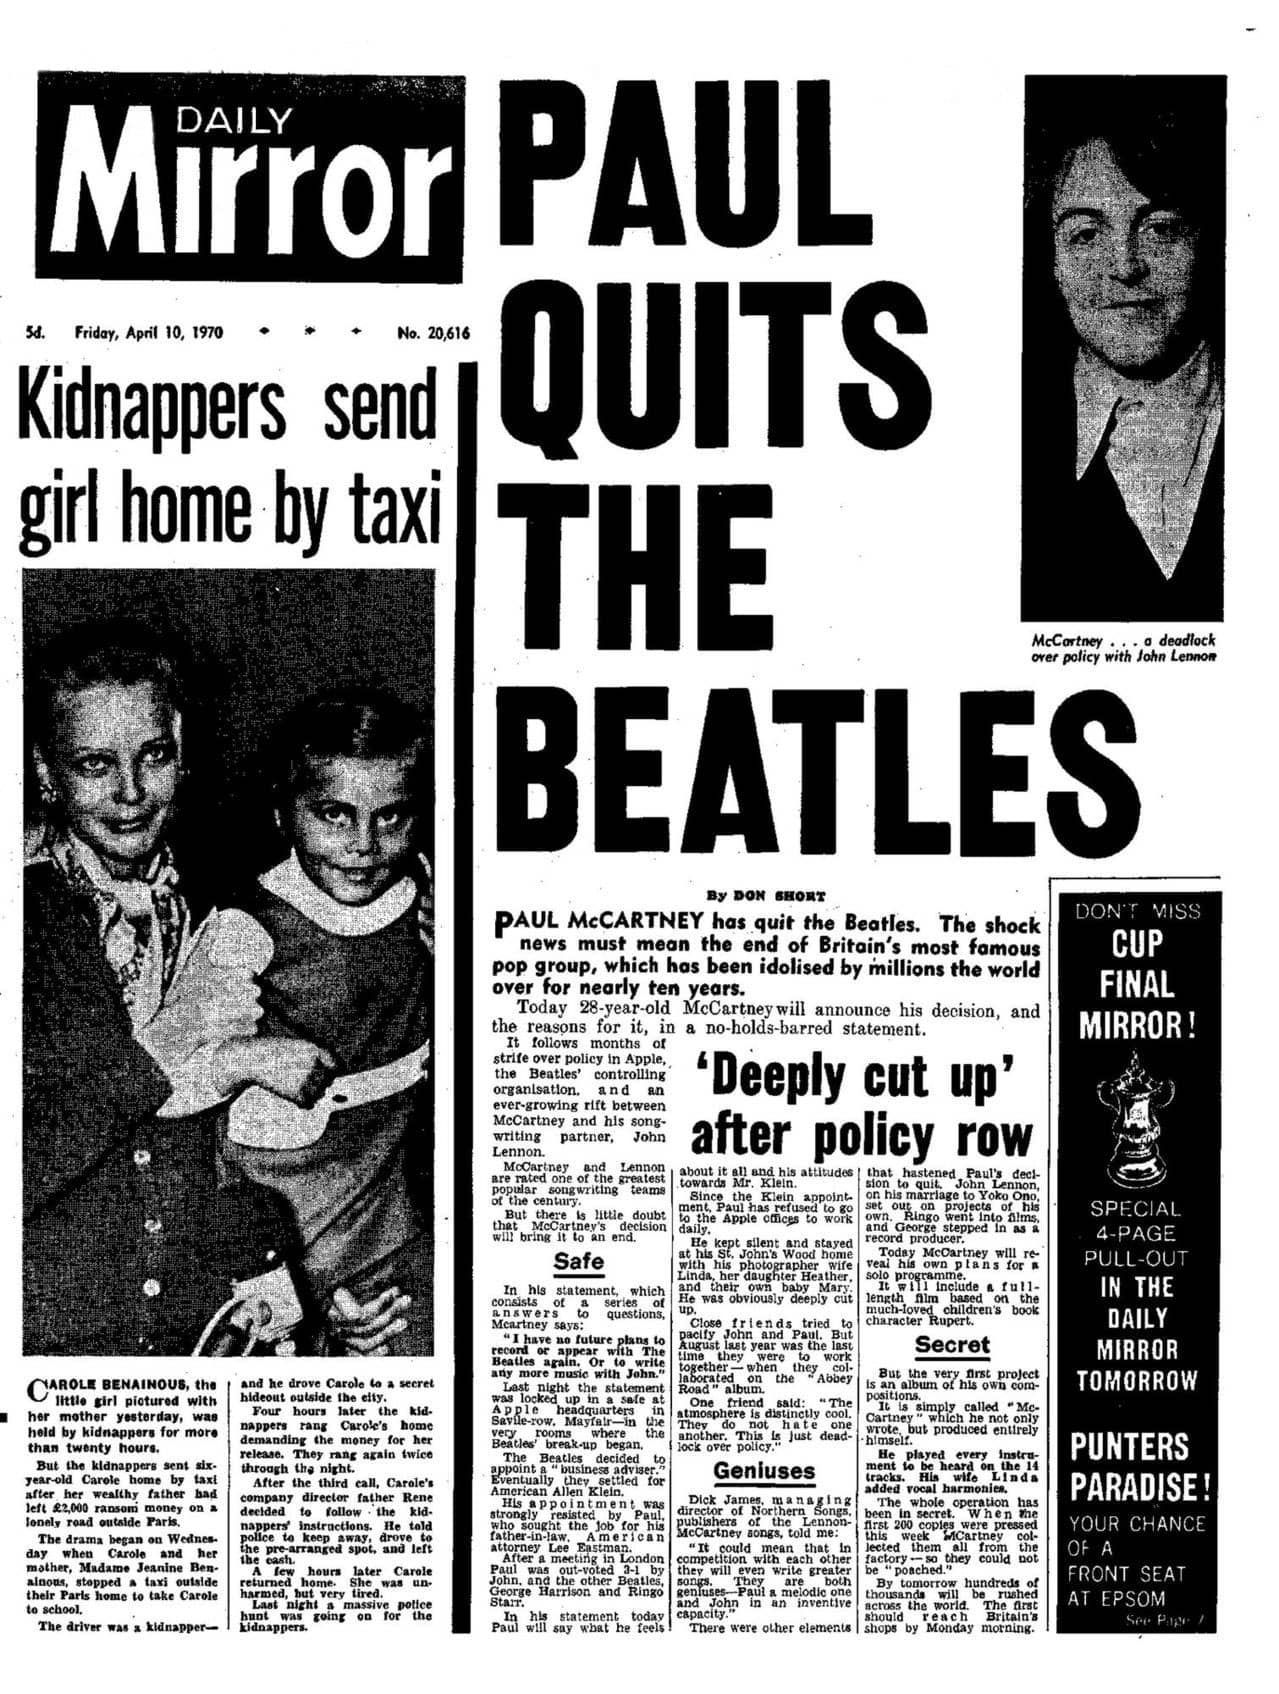 Daily Mirror, Paul McCartney